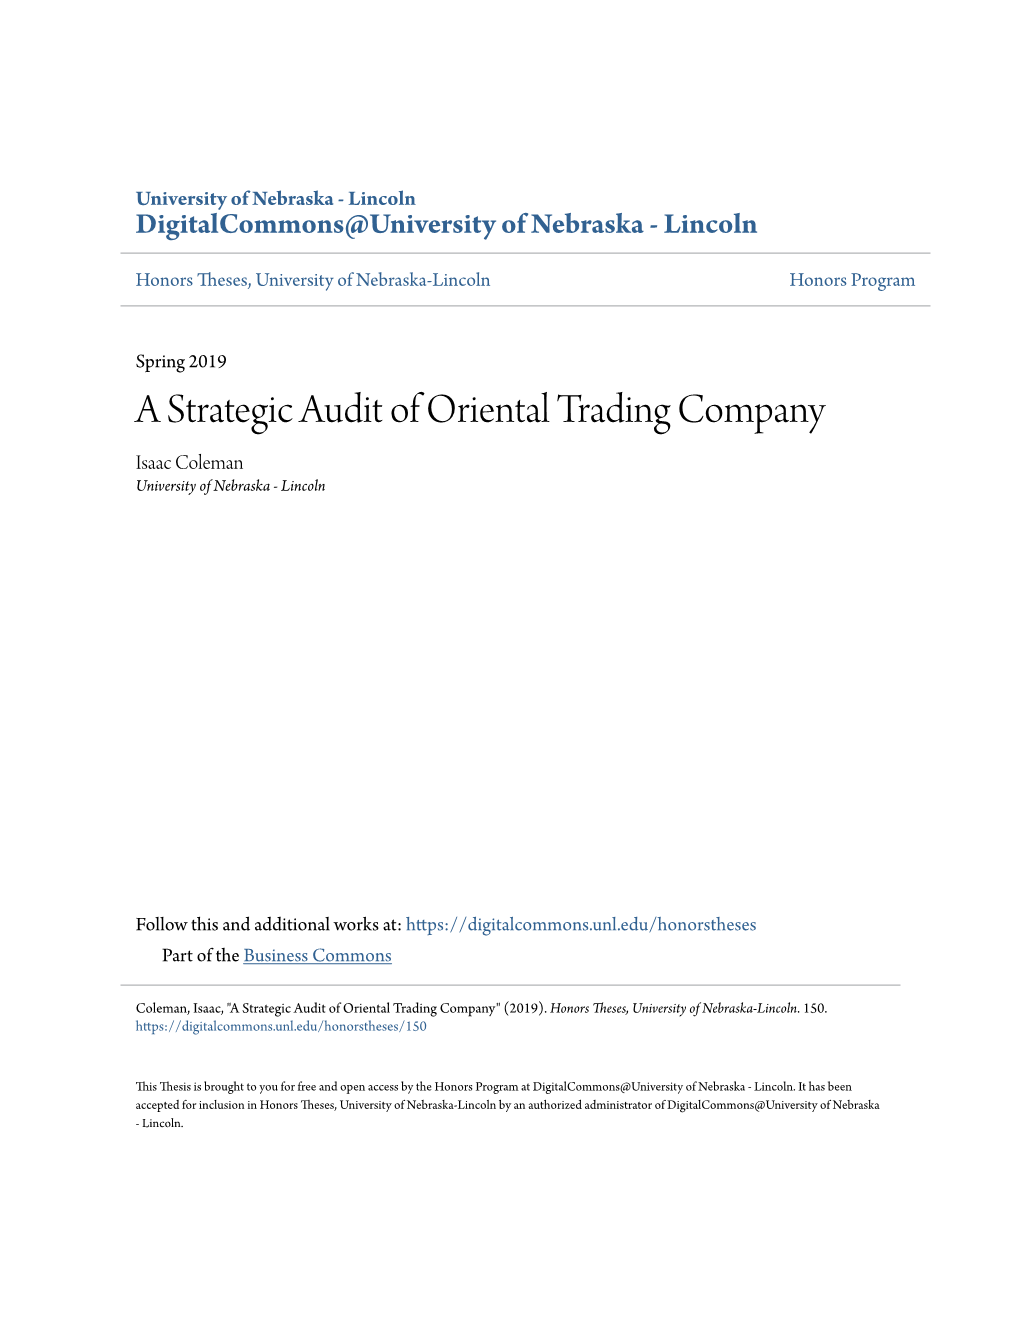 A Strategic Audit of Oriental Trading Company Isaac Coleman University of Nebraska - Lincoln